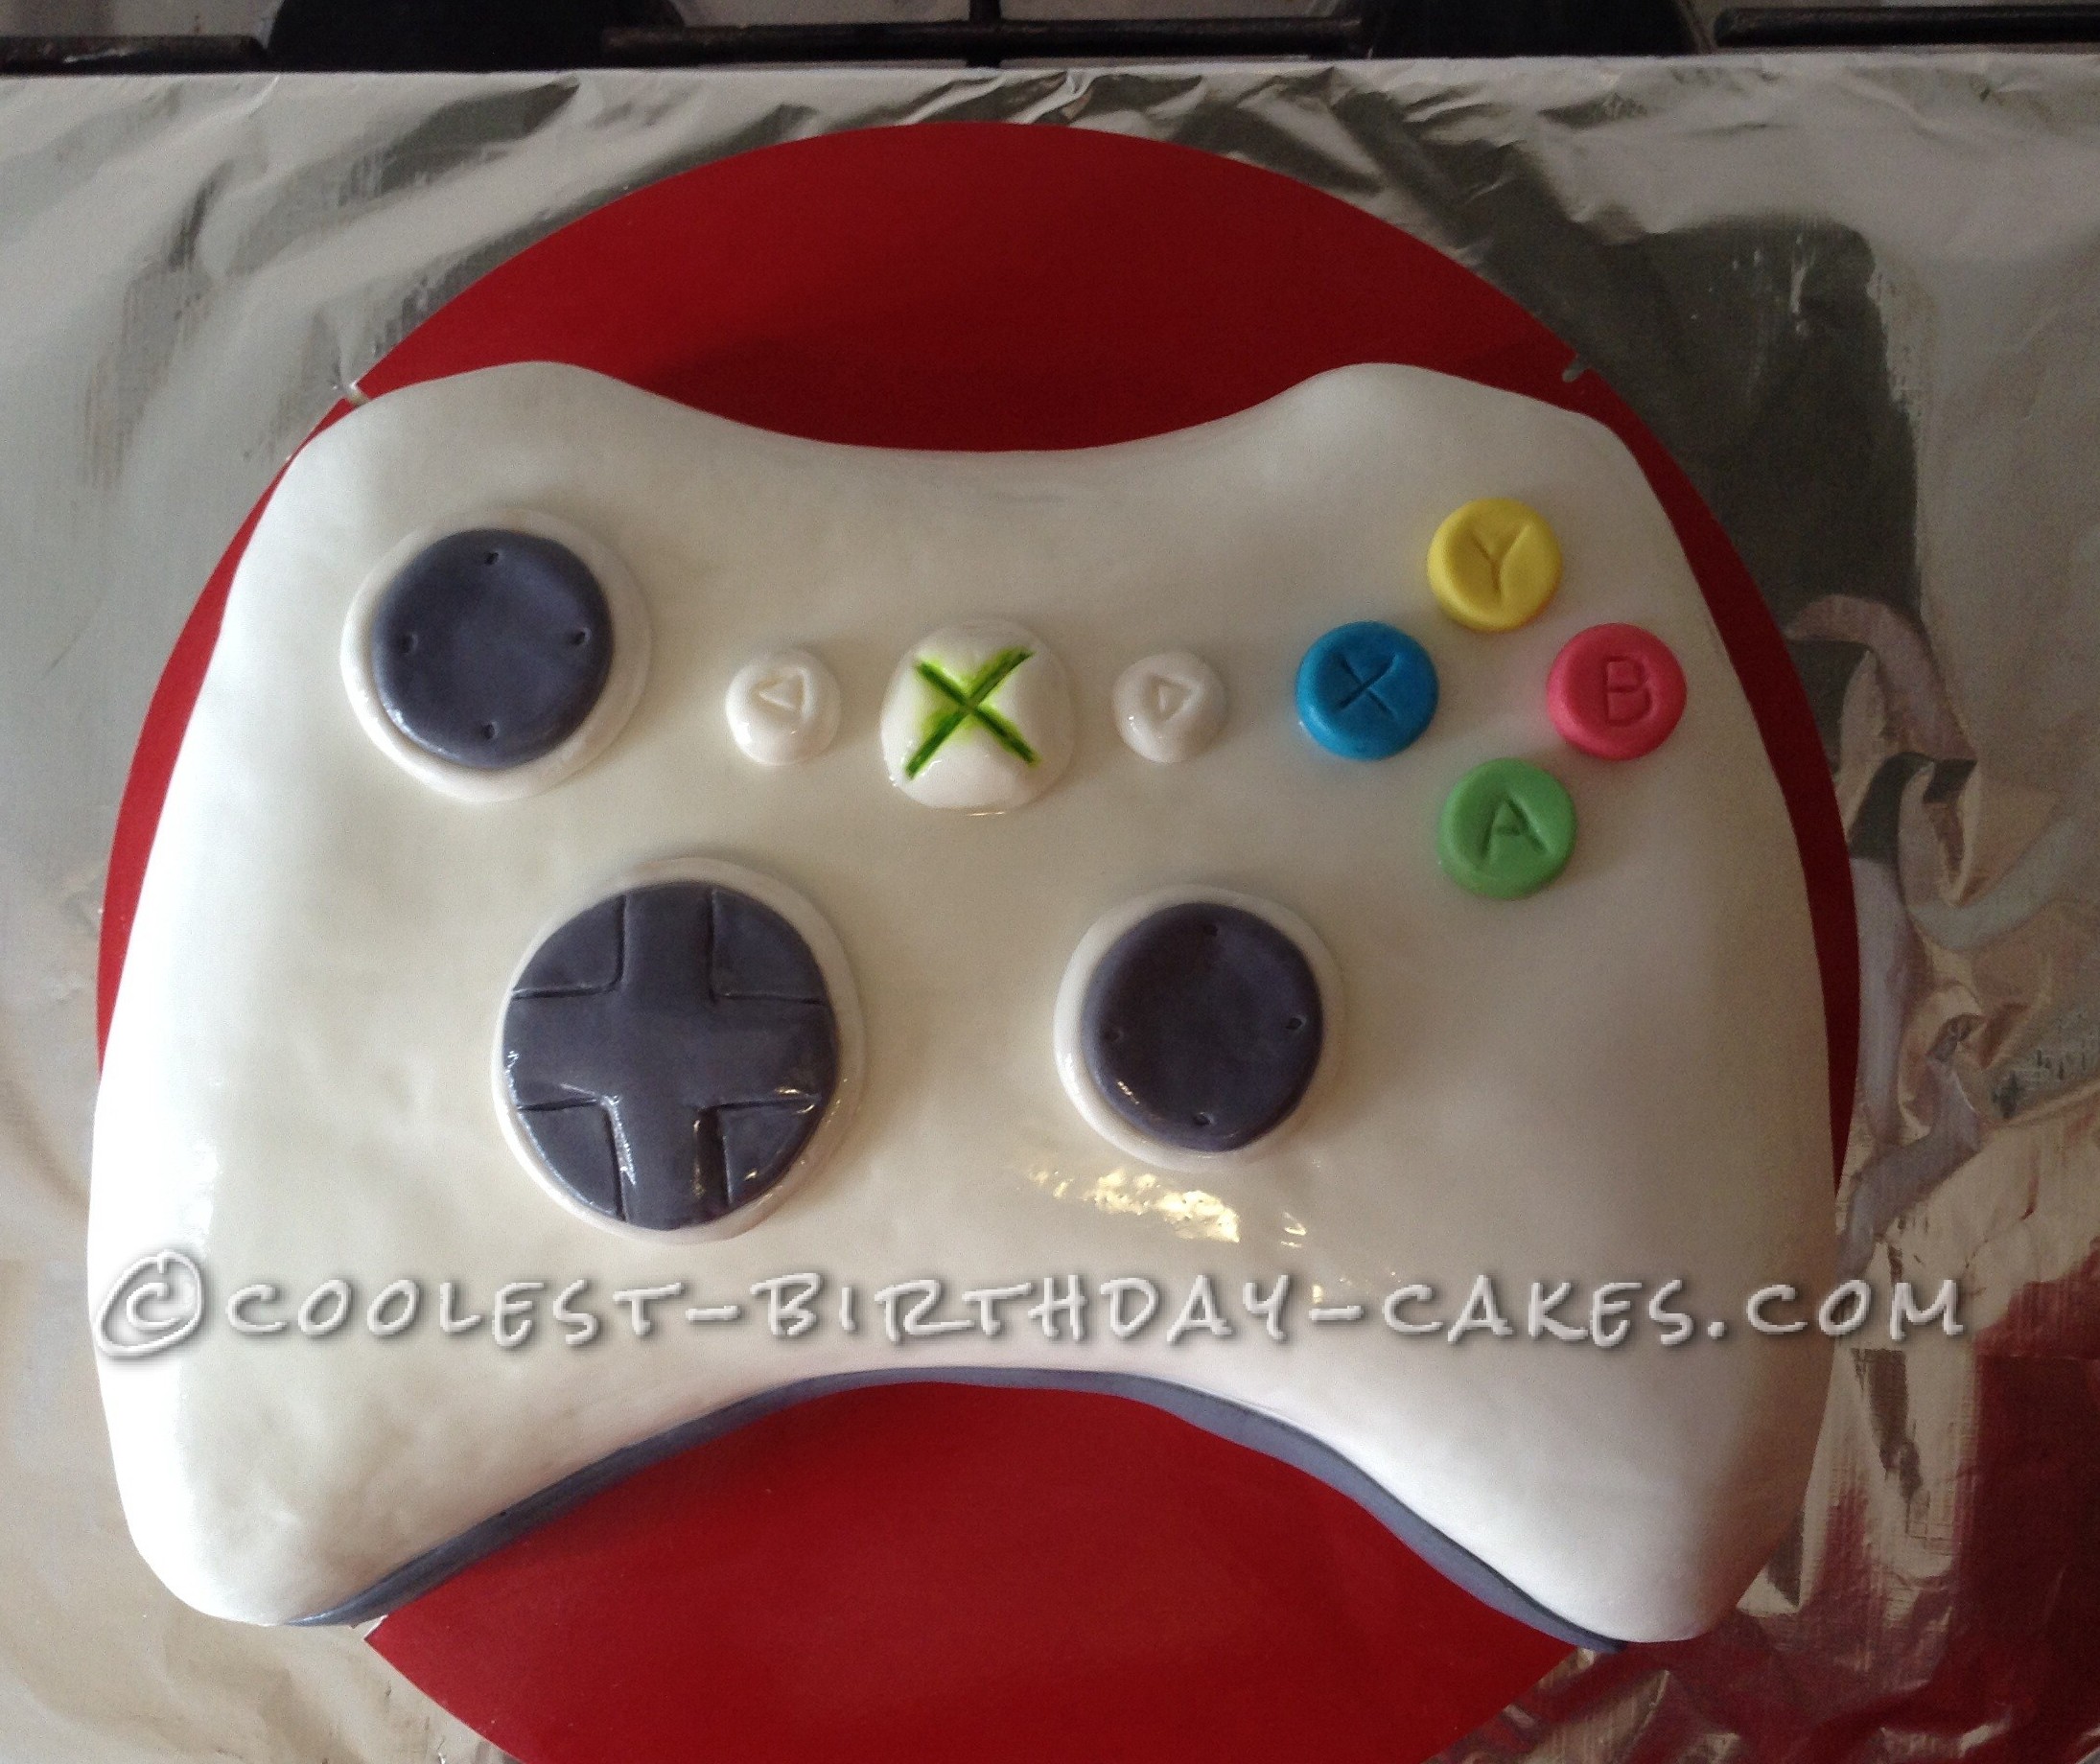 Cool X Box Contoller Cake